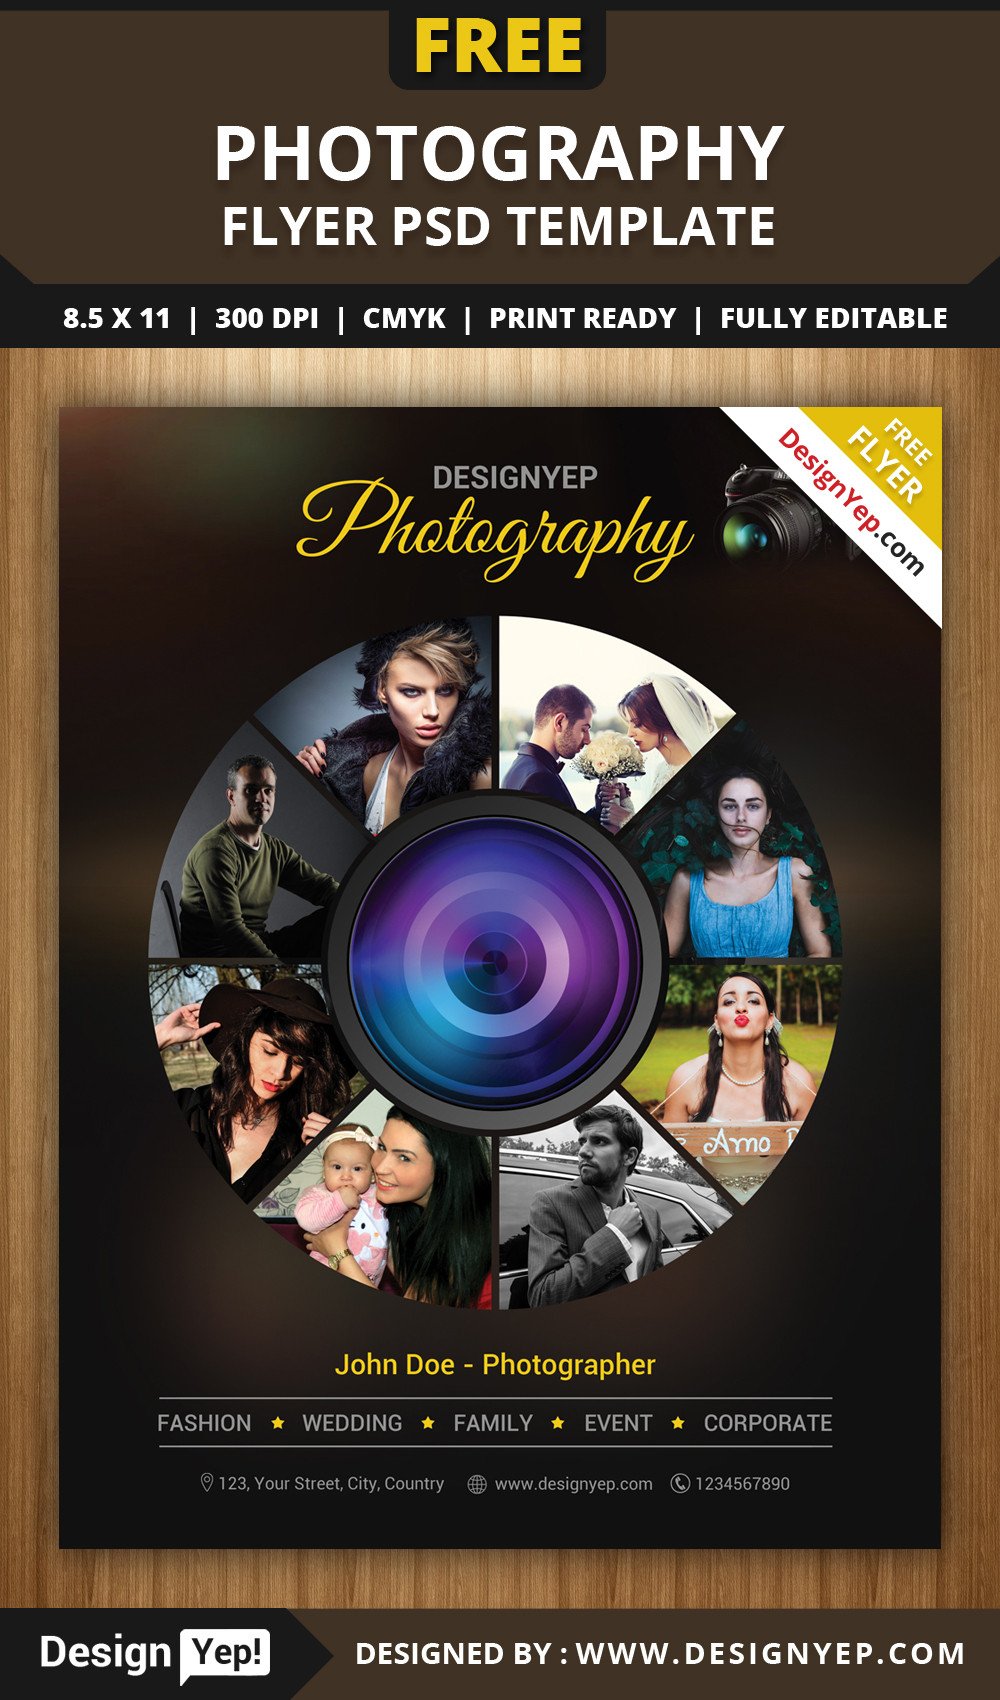 Free Photography Flyer Templates Free Graphy Flyer Psd Template Designyep